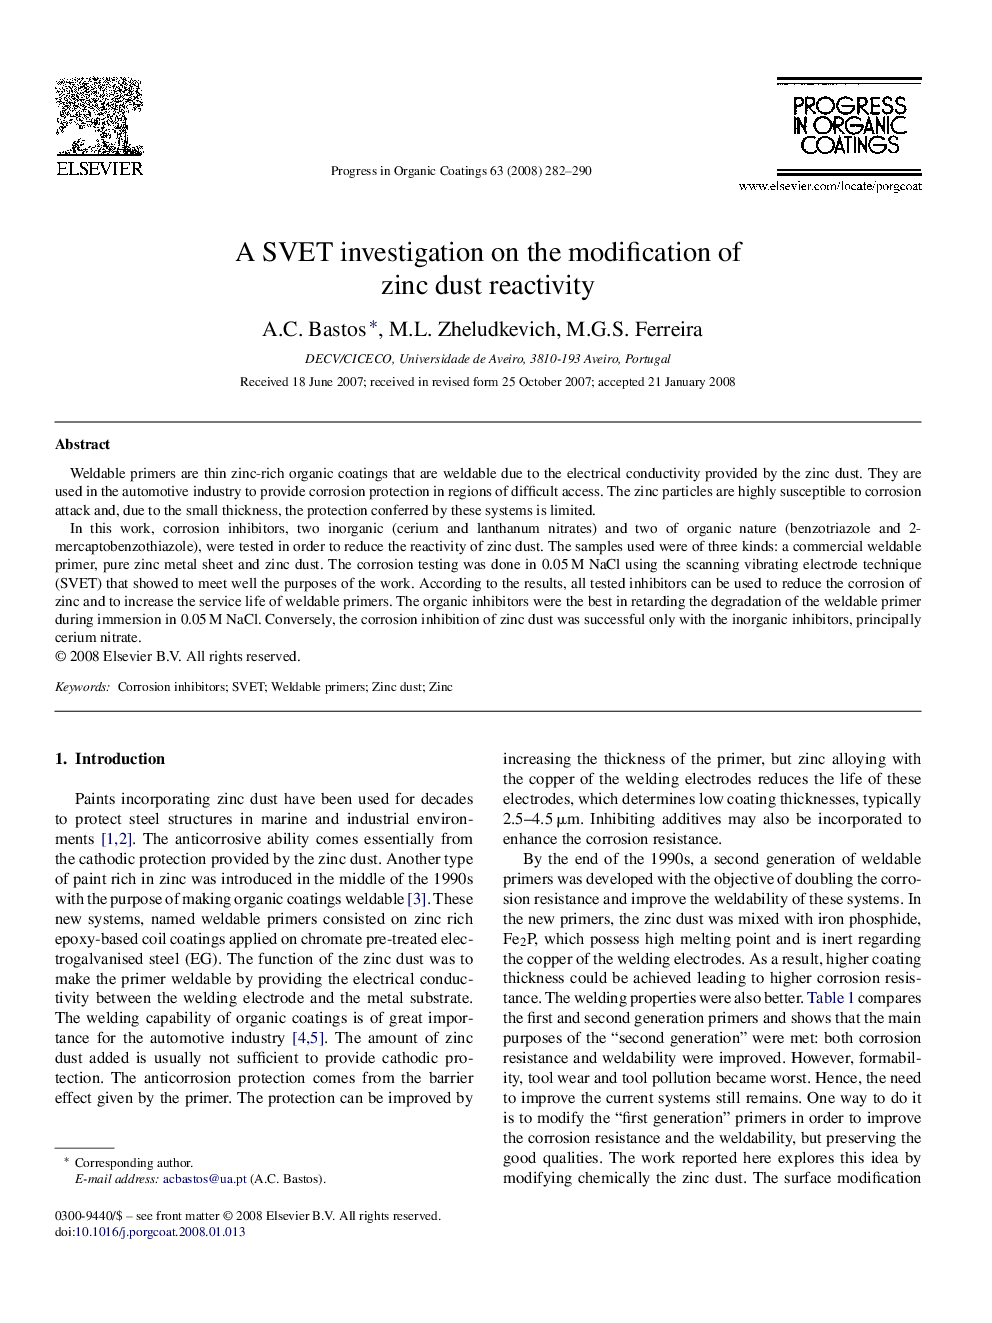 A SVET investigation on the modification of zinc dust reactivity